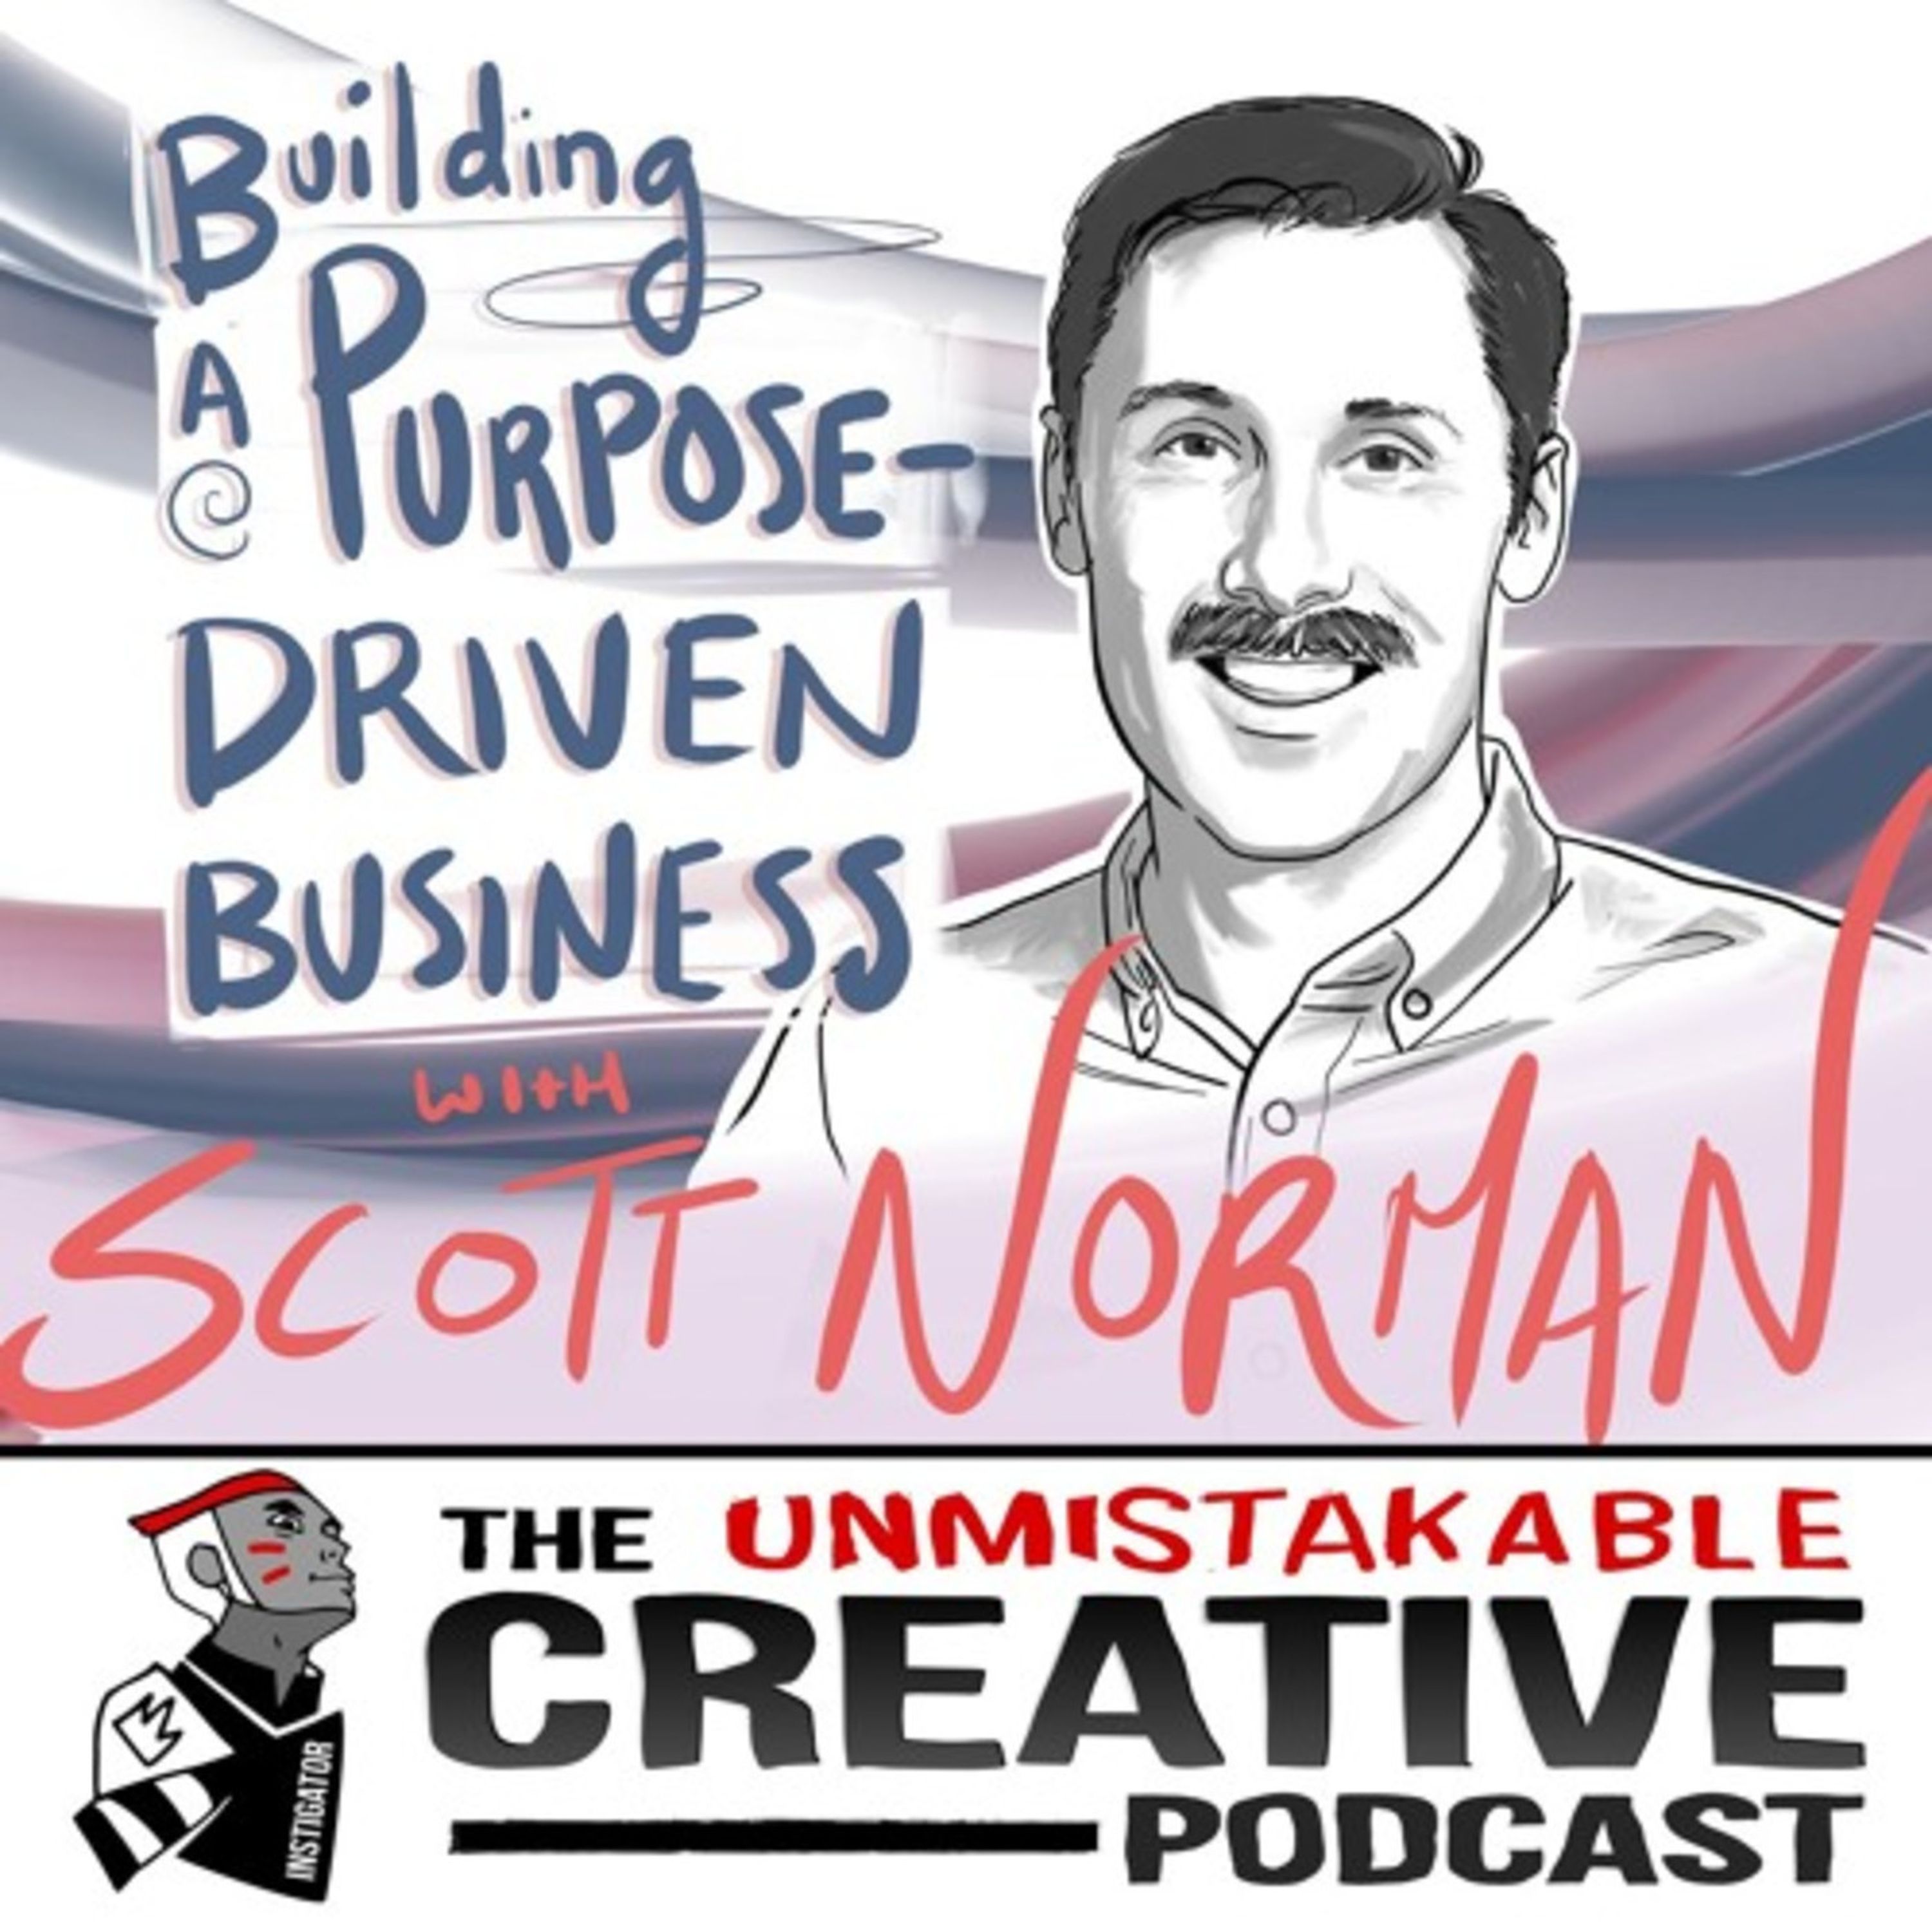 Scott Norton: Building a Purpose Driven Business